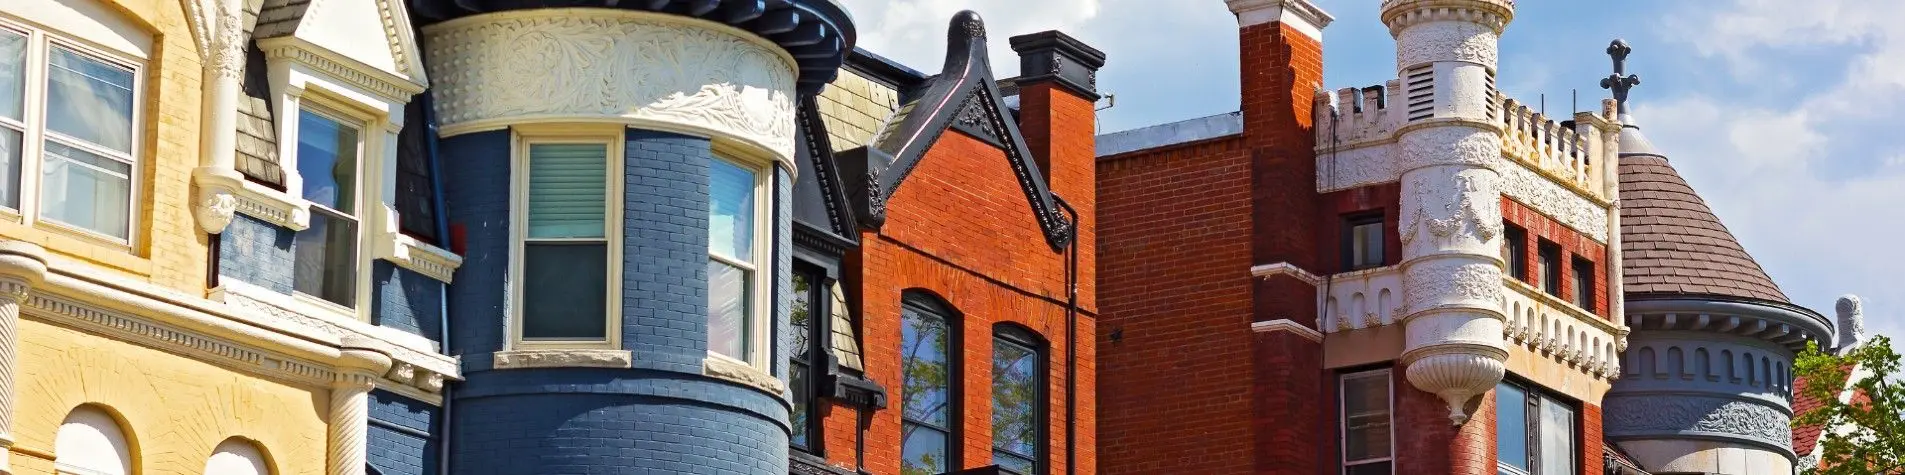 Historic home exteriors in Washington, DC